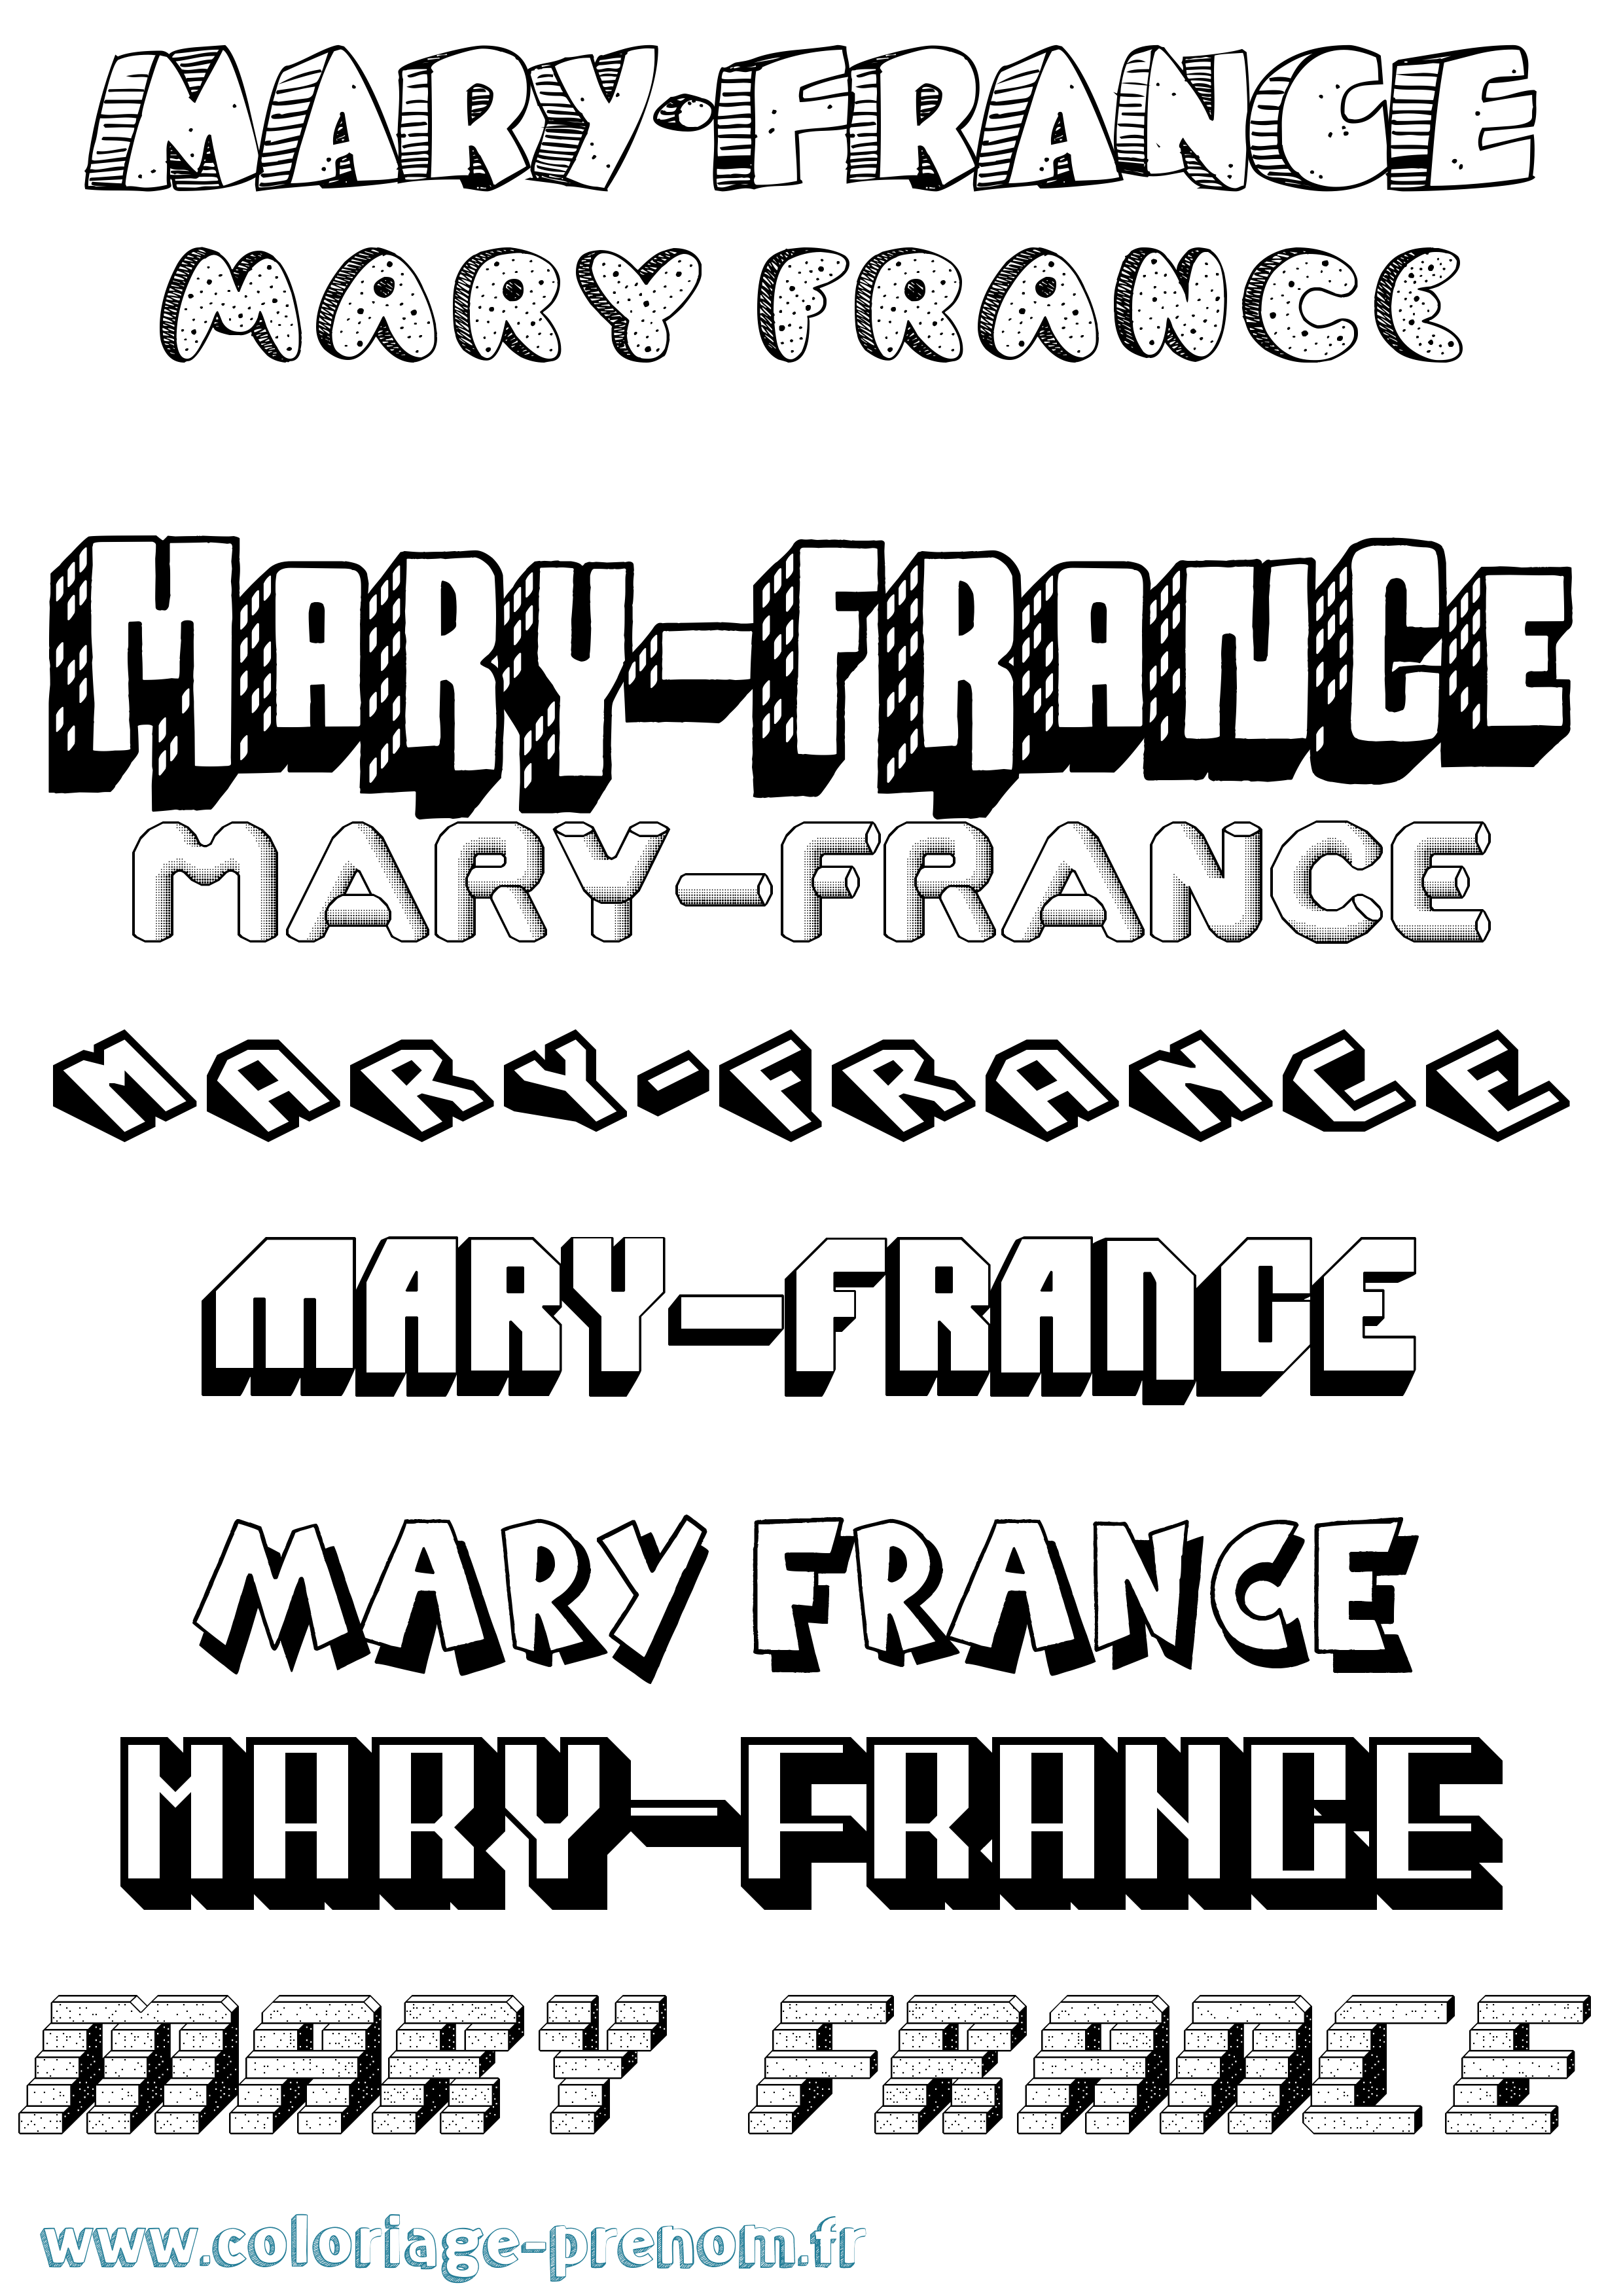 Coloriage prénom Mary-France Effet 3D